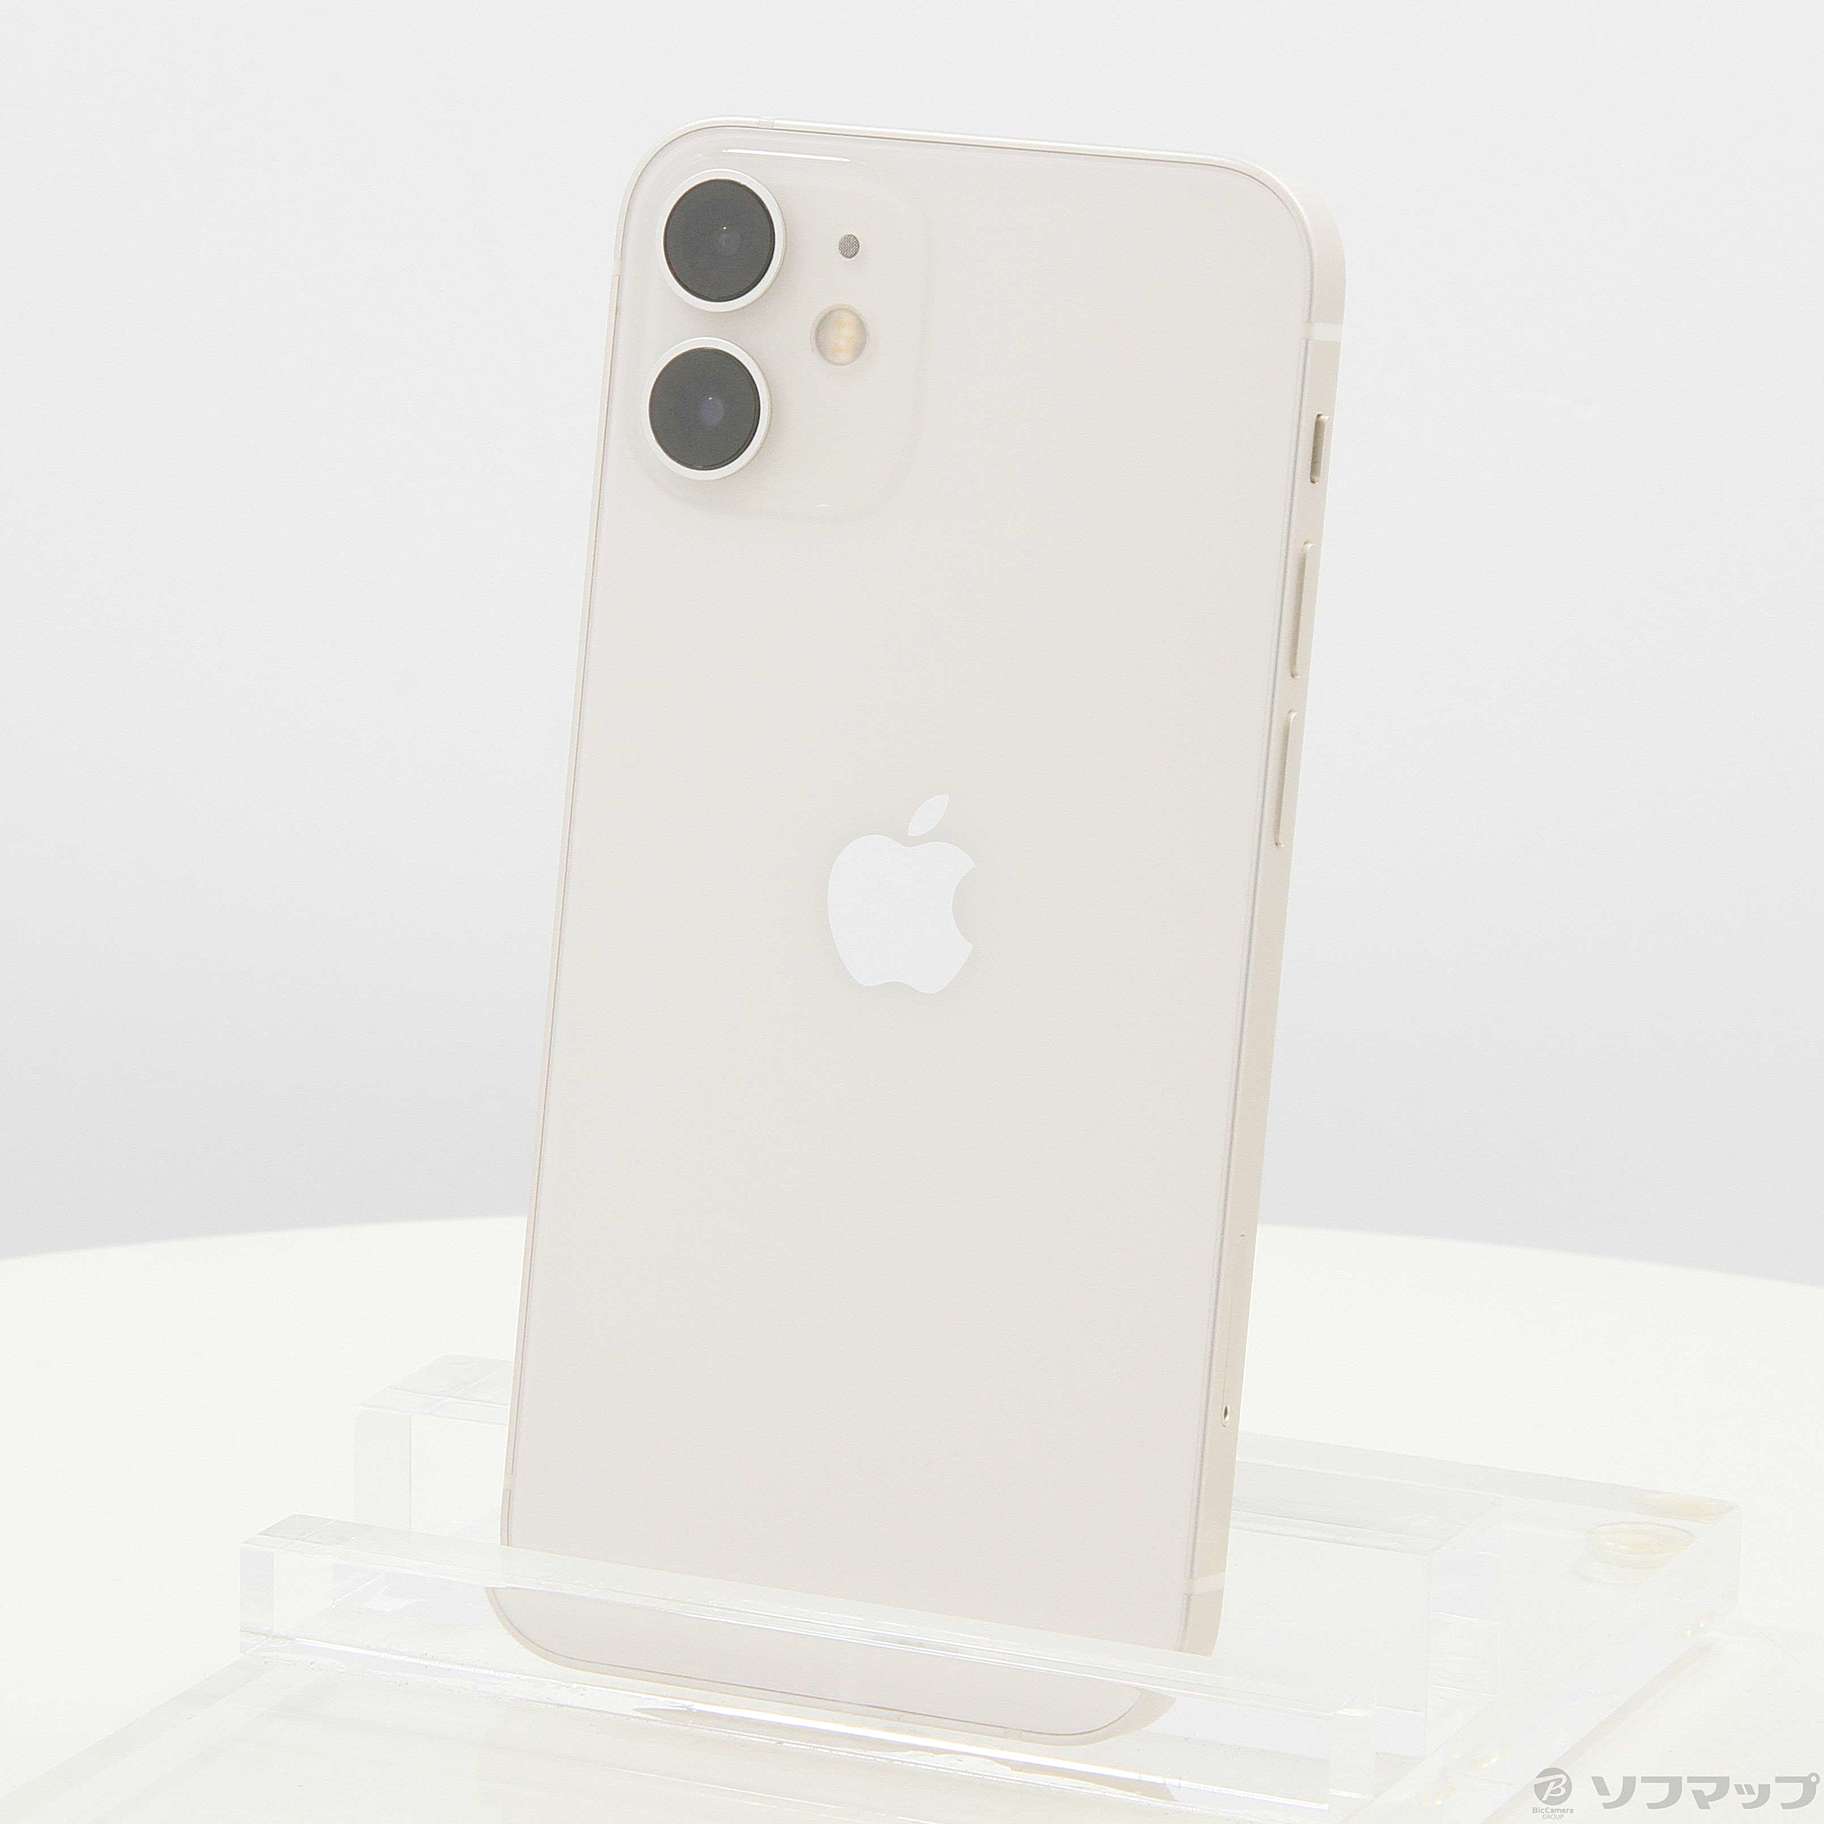 Appleアップル iPhone12 mini 64GB ホワイト softbank 